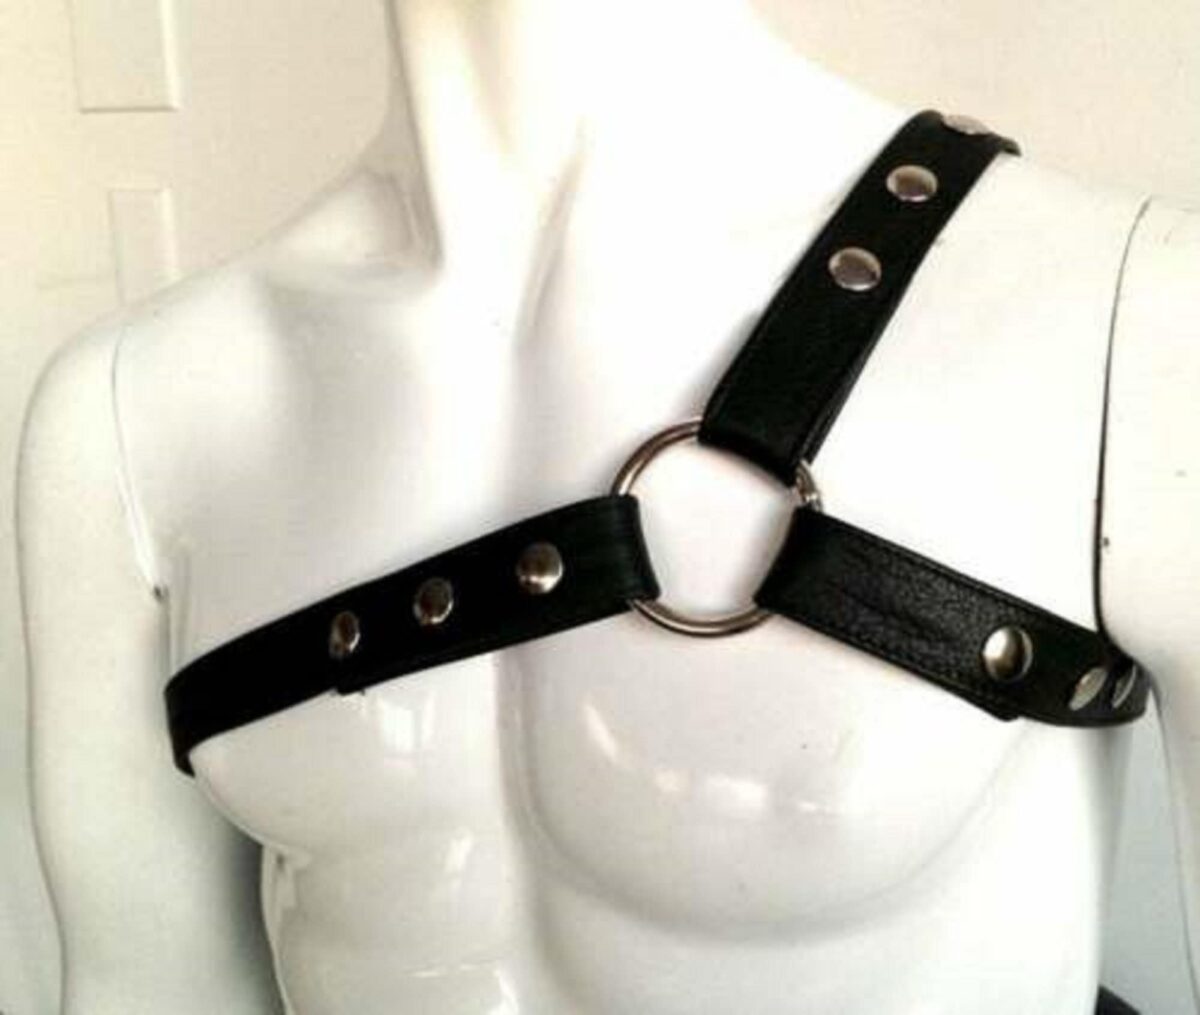 bondage leather harness for men, men's leather chest harness, bdsm leather harness